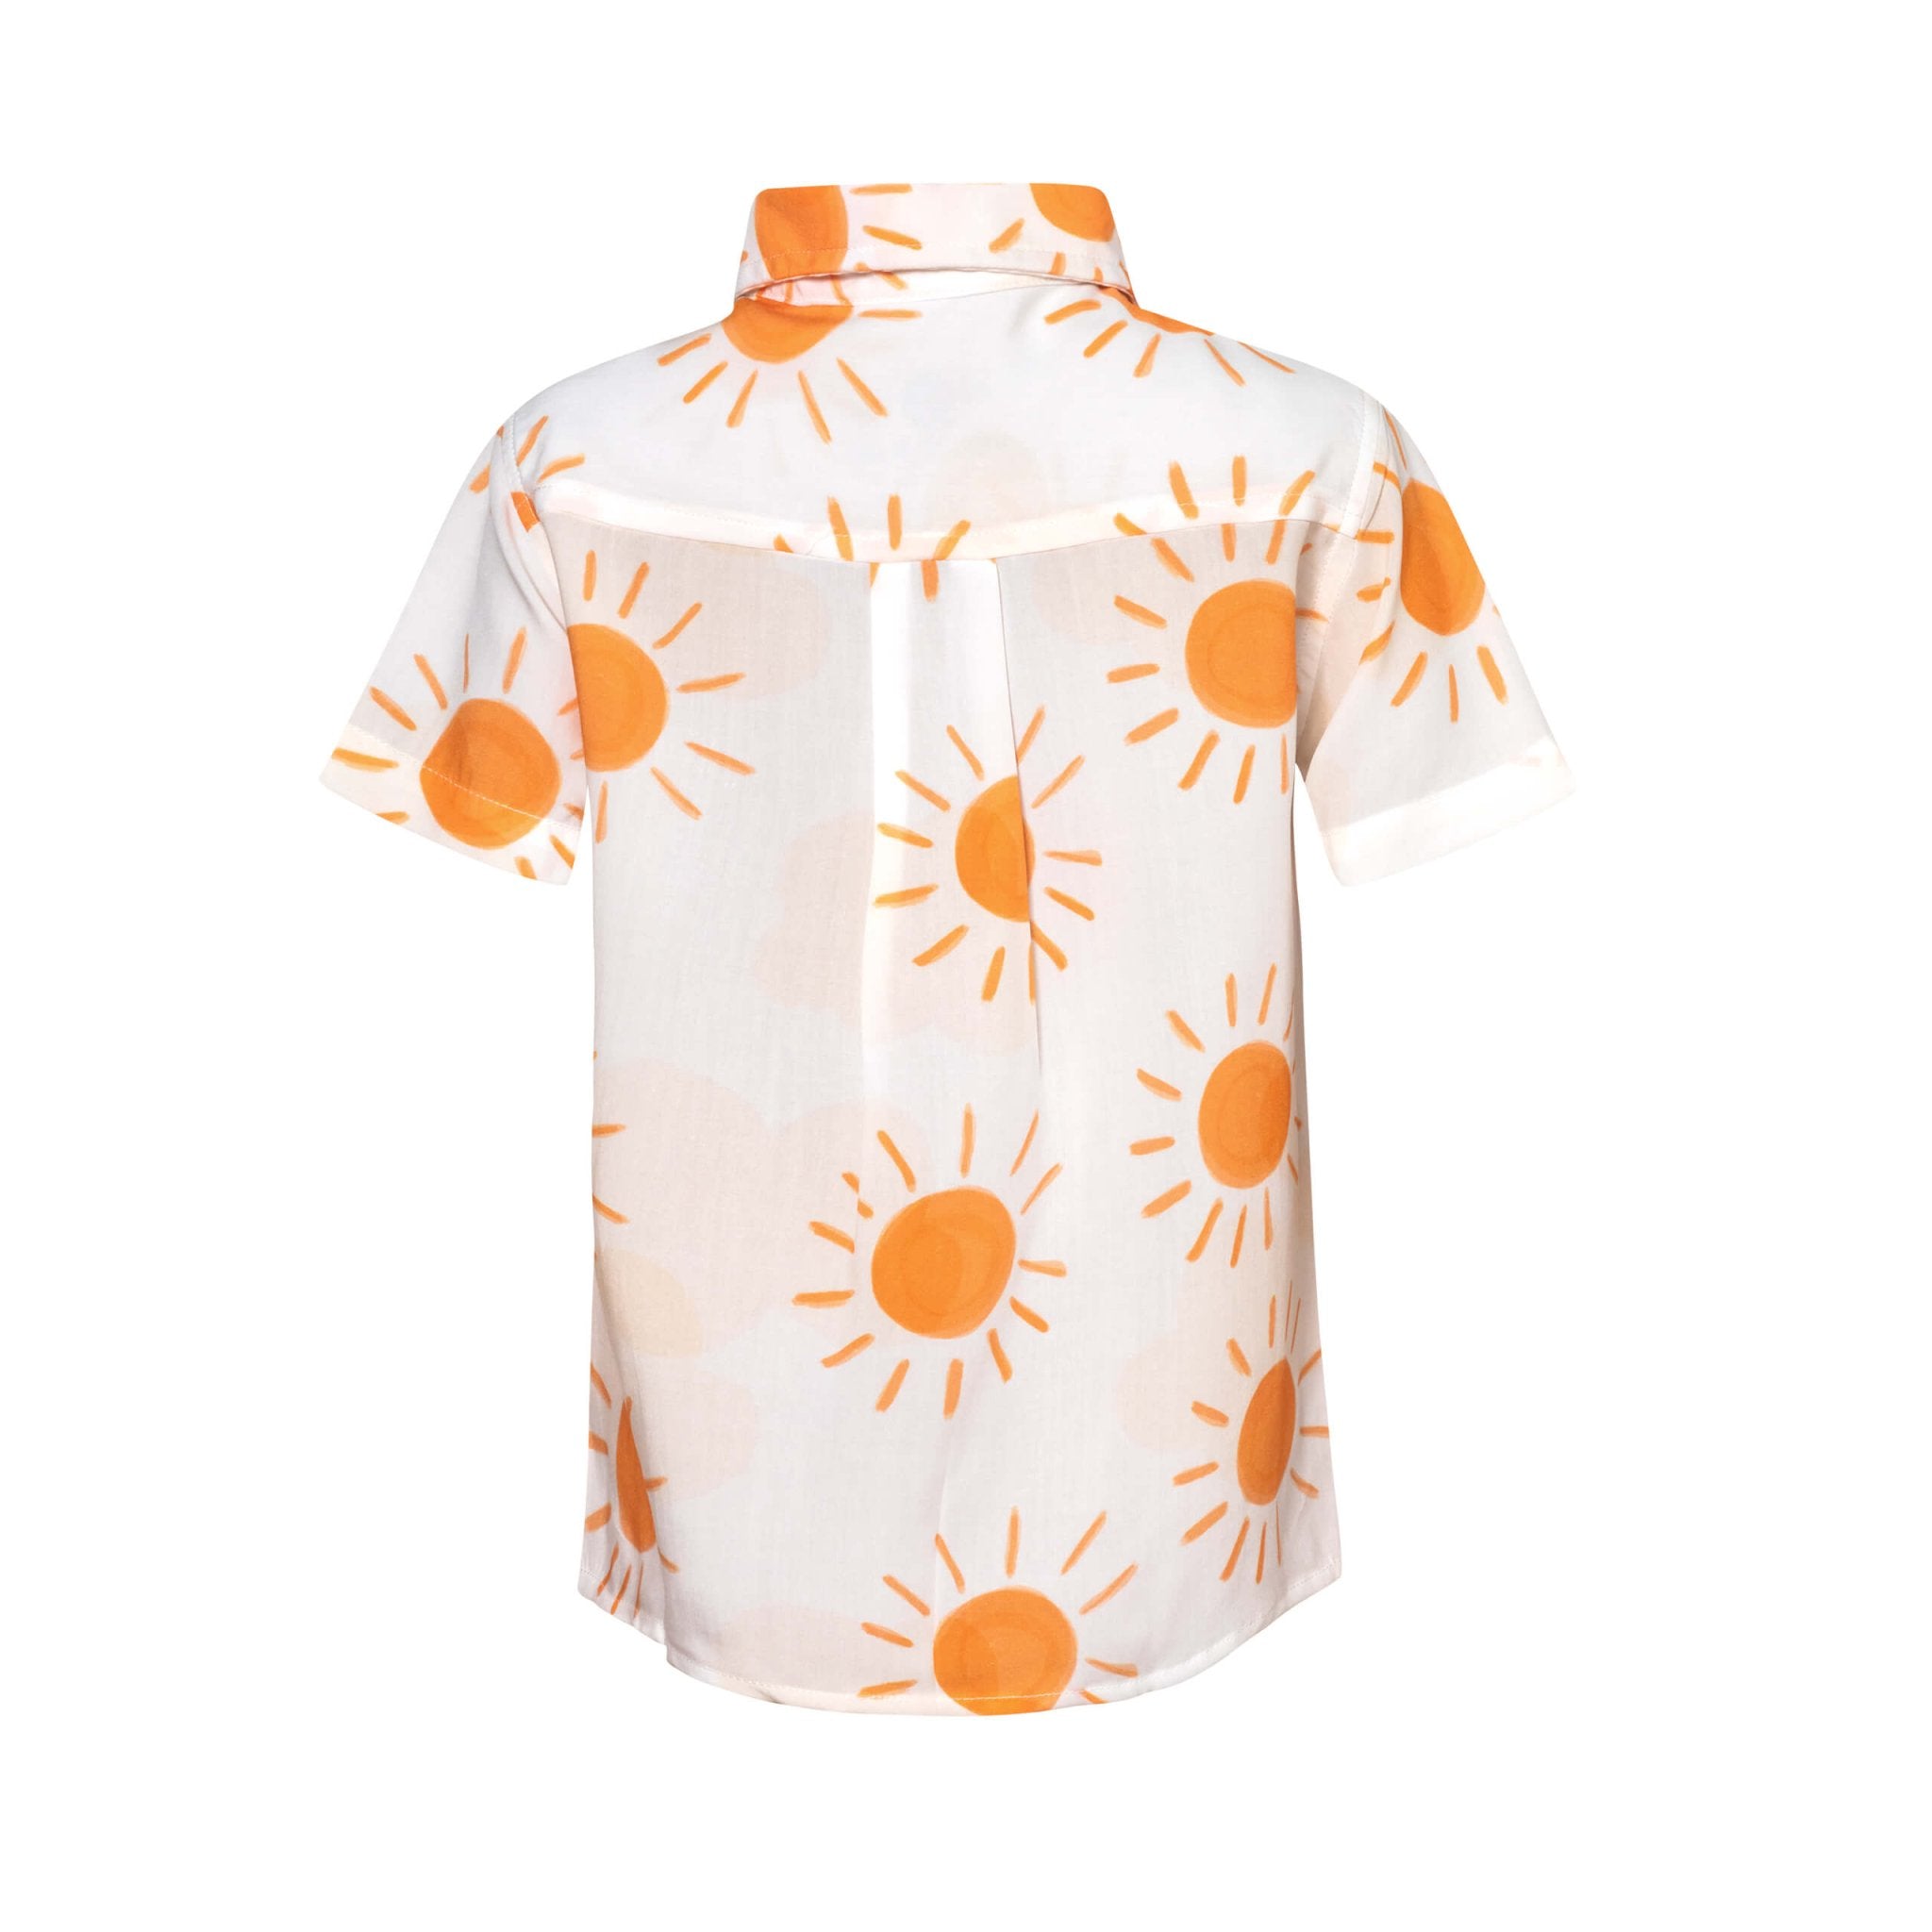 back of white sun shine shirt against a white background 